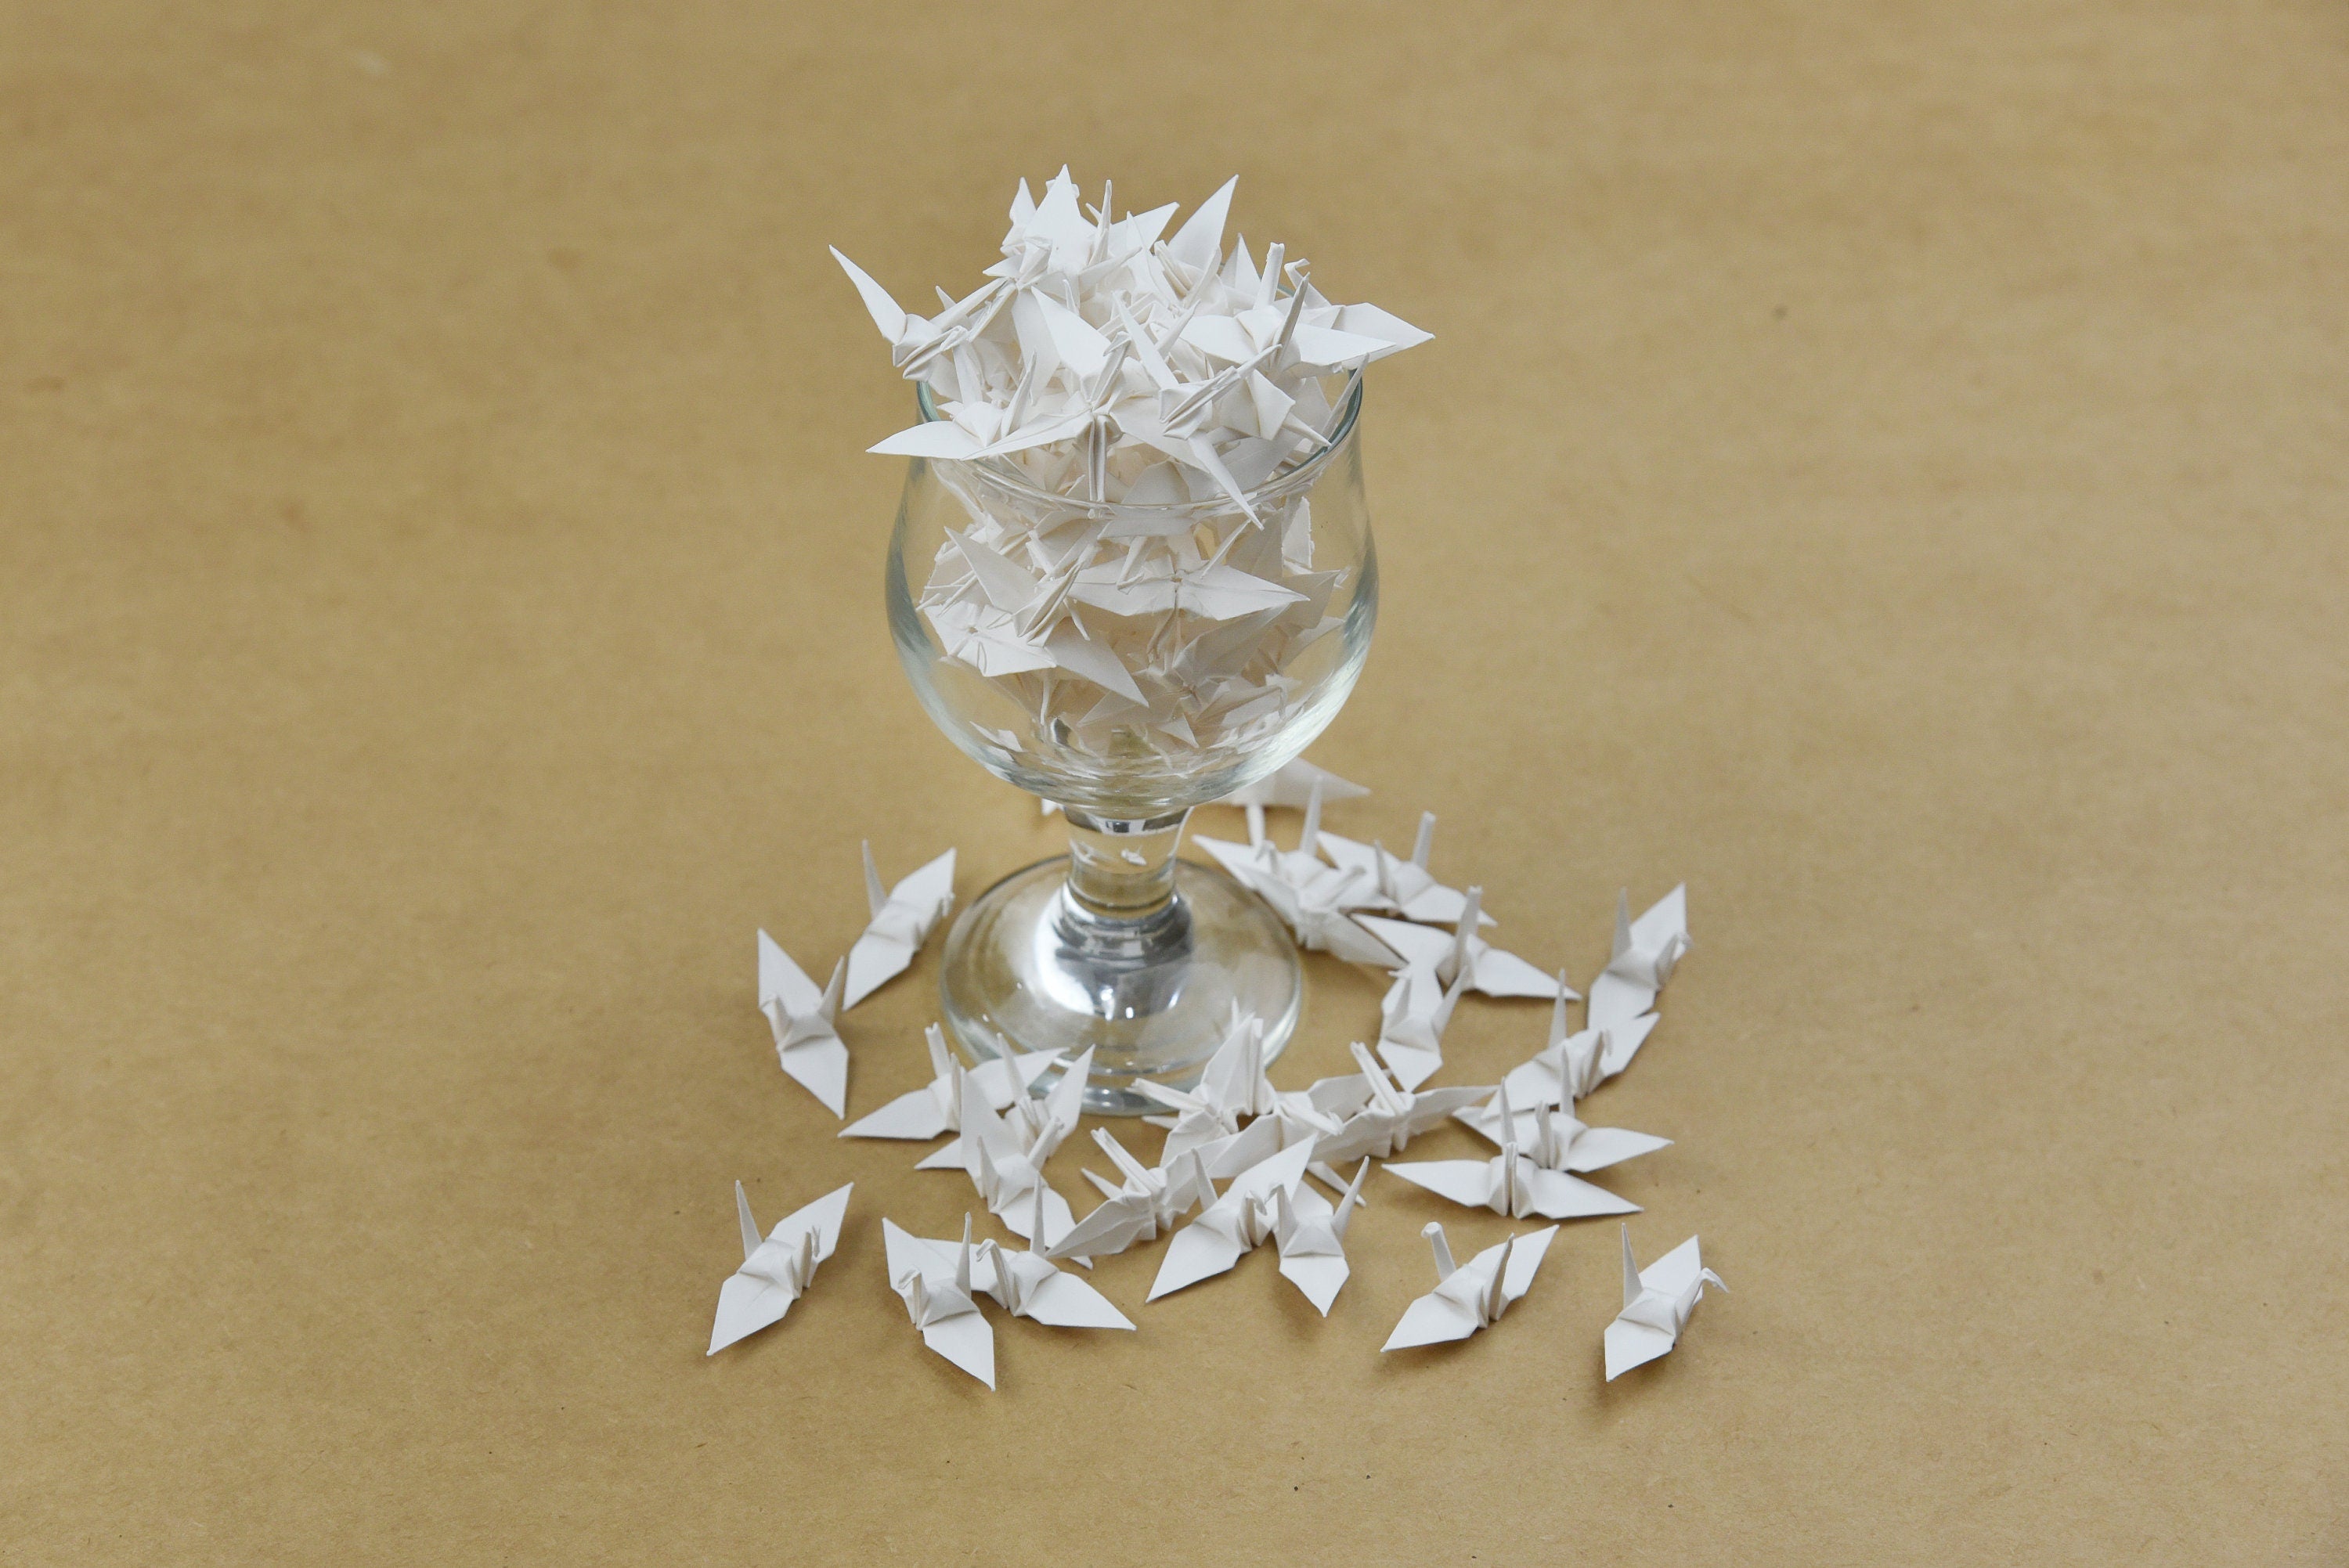 1000 Origami Paper Crane Ivory - Handmade Folded - 1.5 inch - Japan Ornament, Christmas, Wedding Decoration